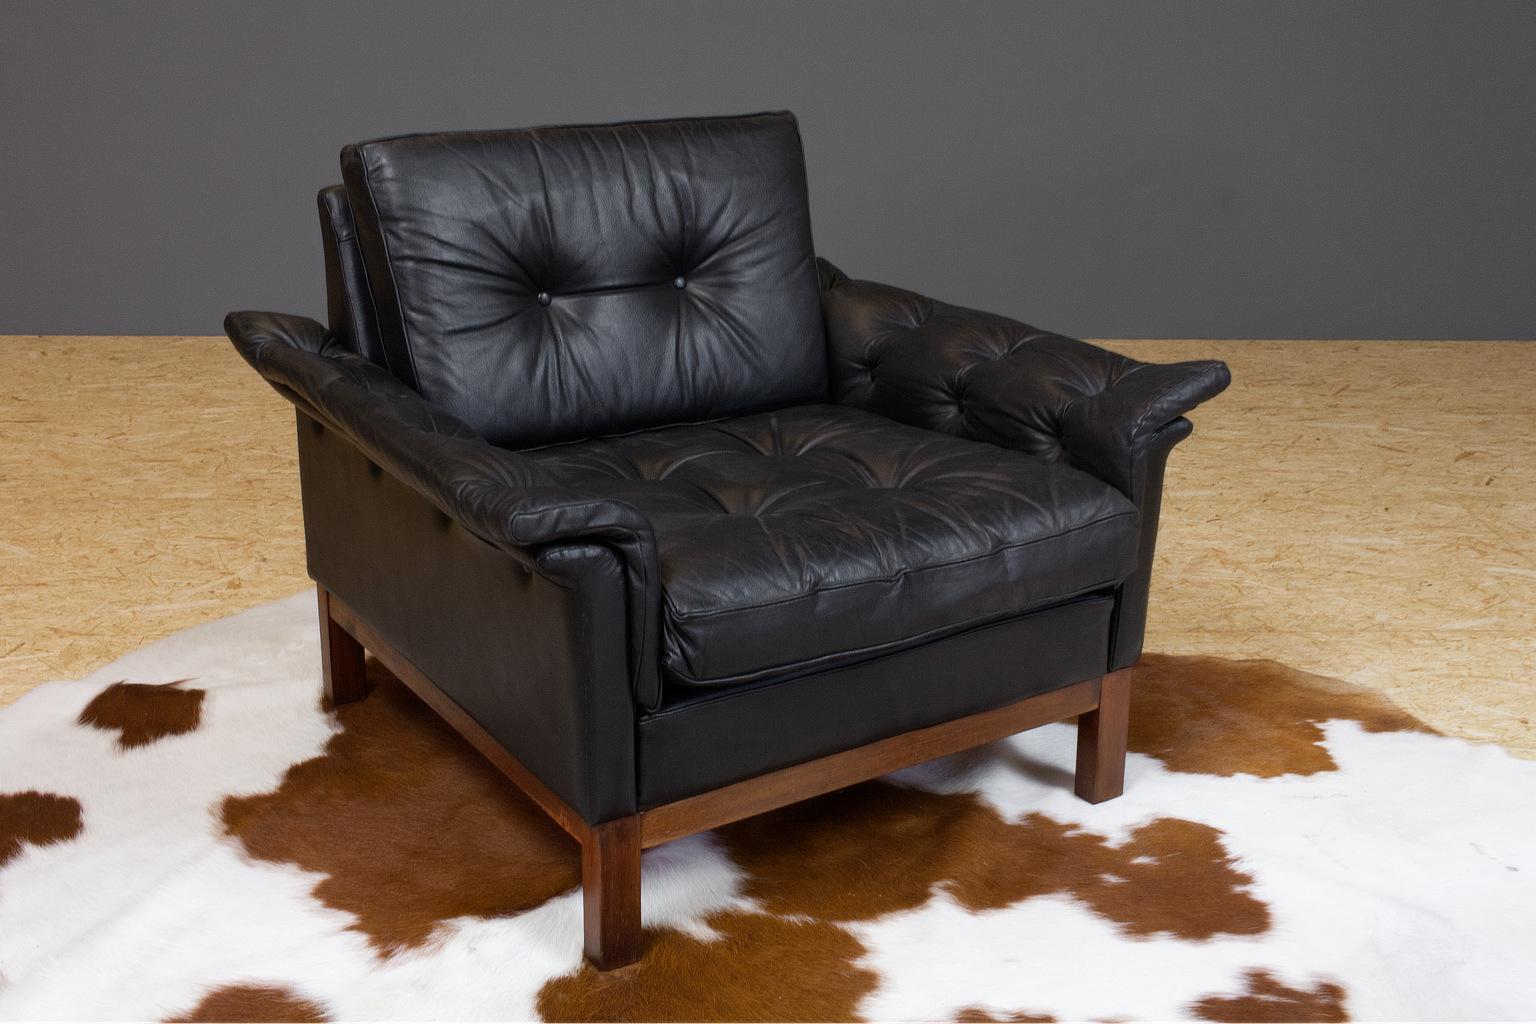 Mid-20th Century Scandinavian Modern Lounge Chair in Black Leather, Danish Modern, 1960s